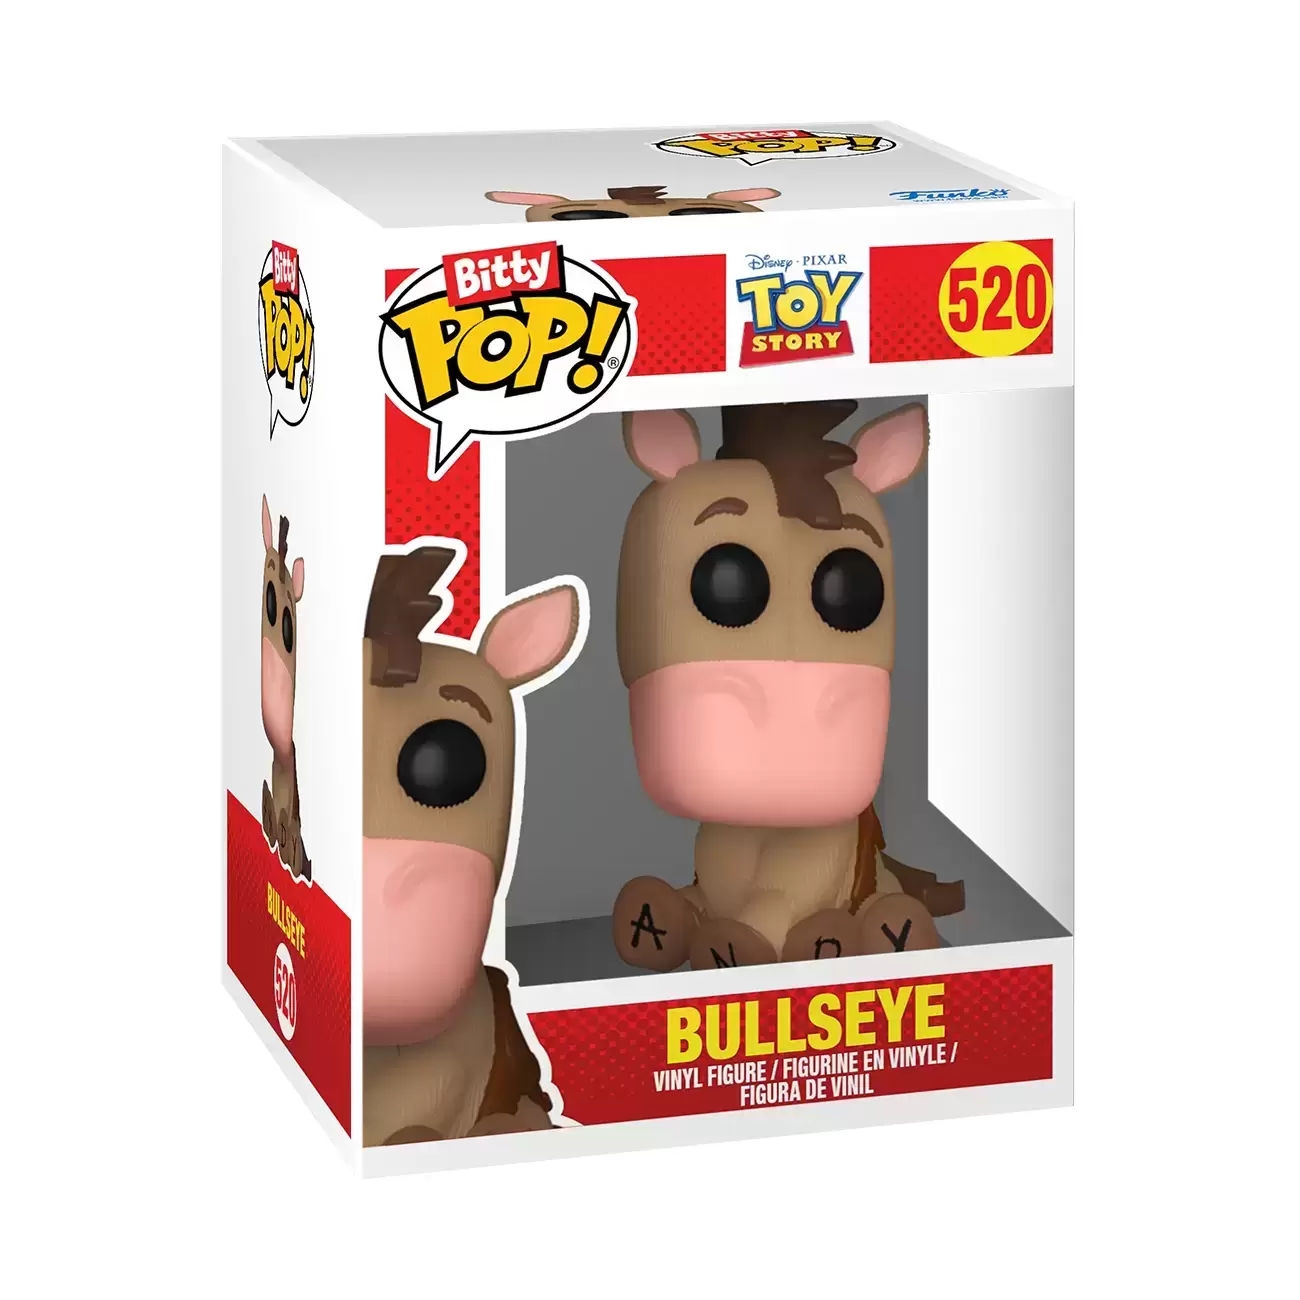 Bitty POP! - Toy Story - Bullseye